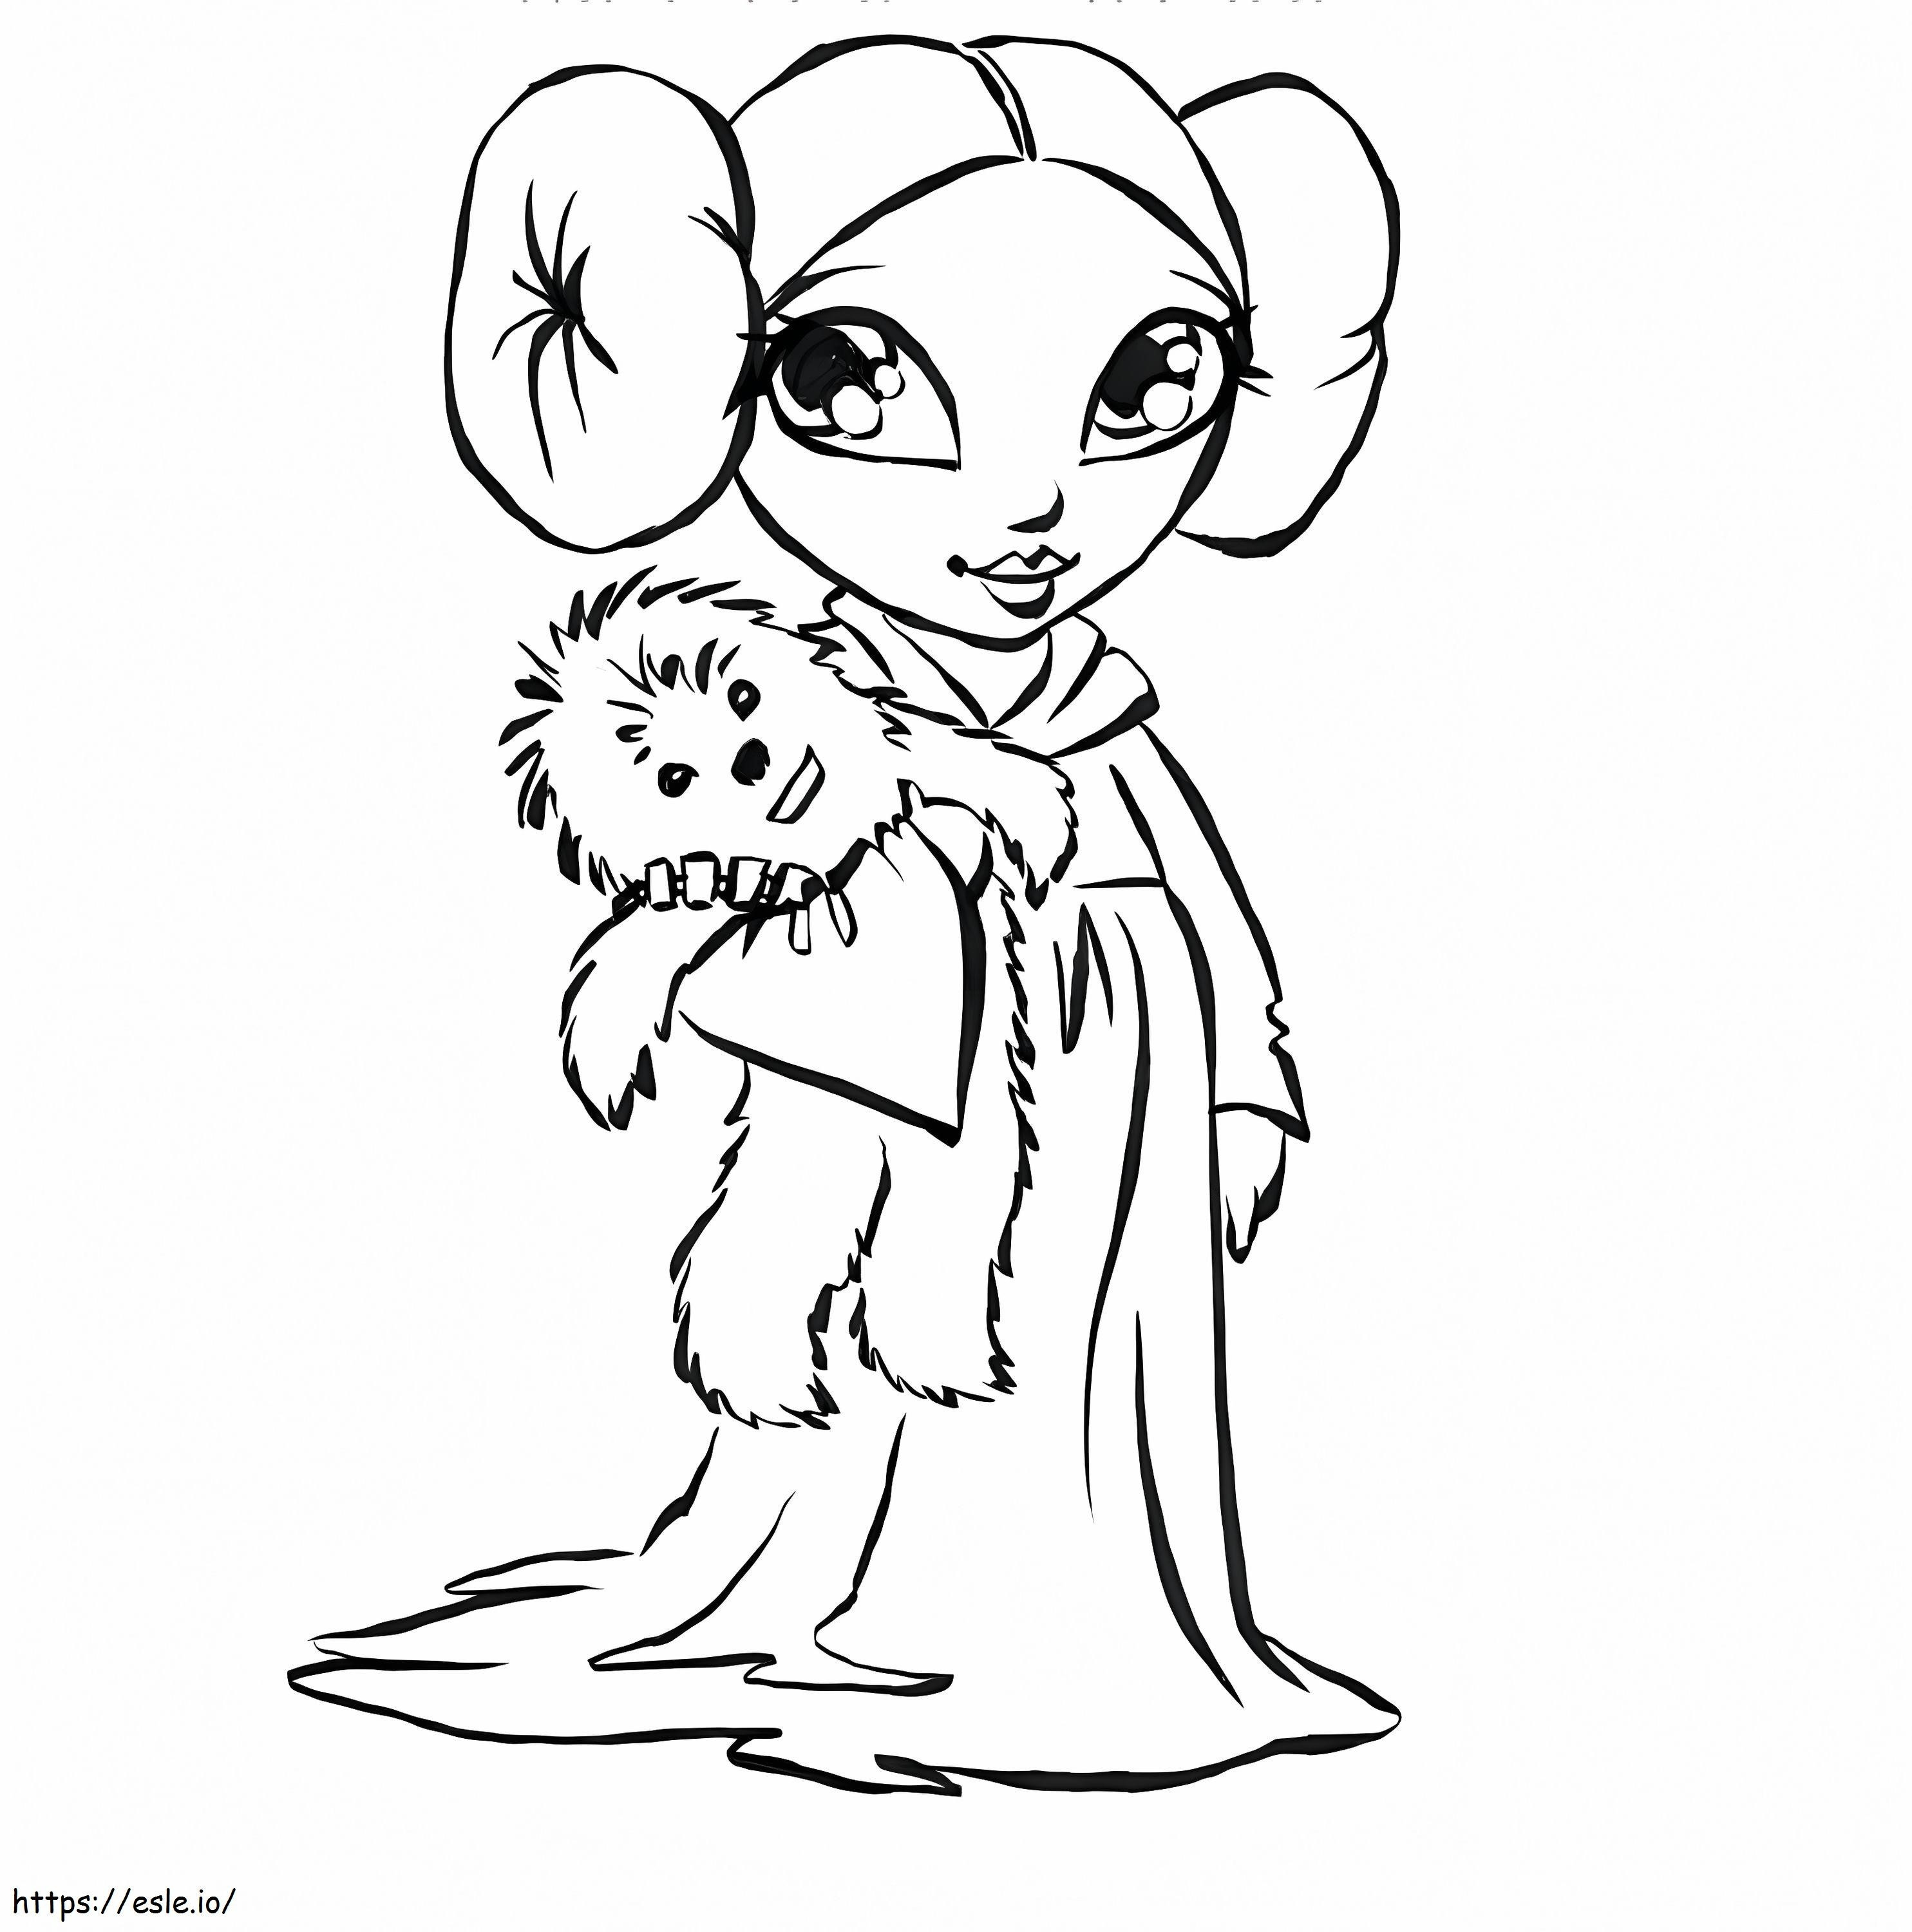 Cute Princess Leia coloring page